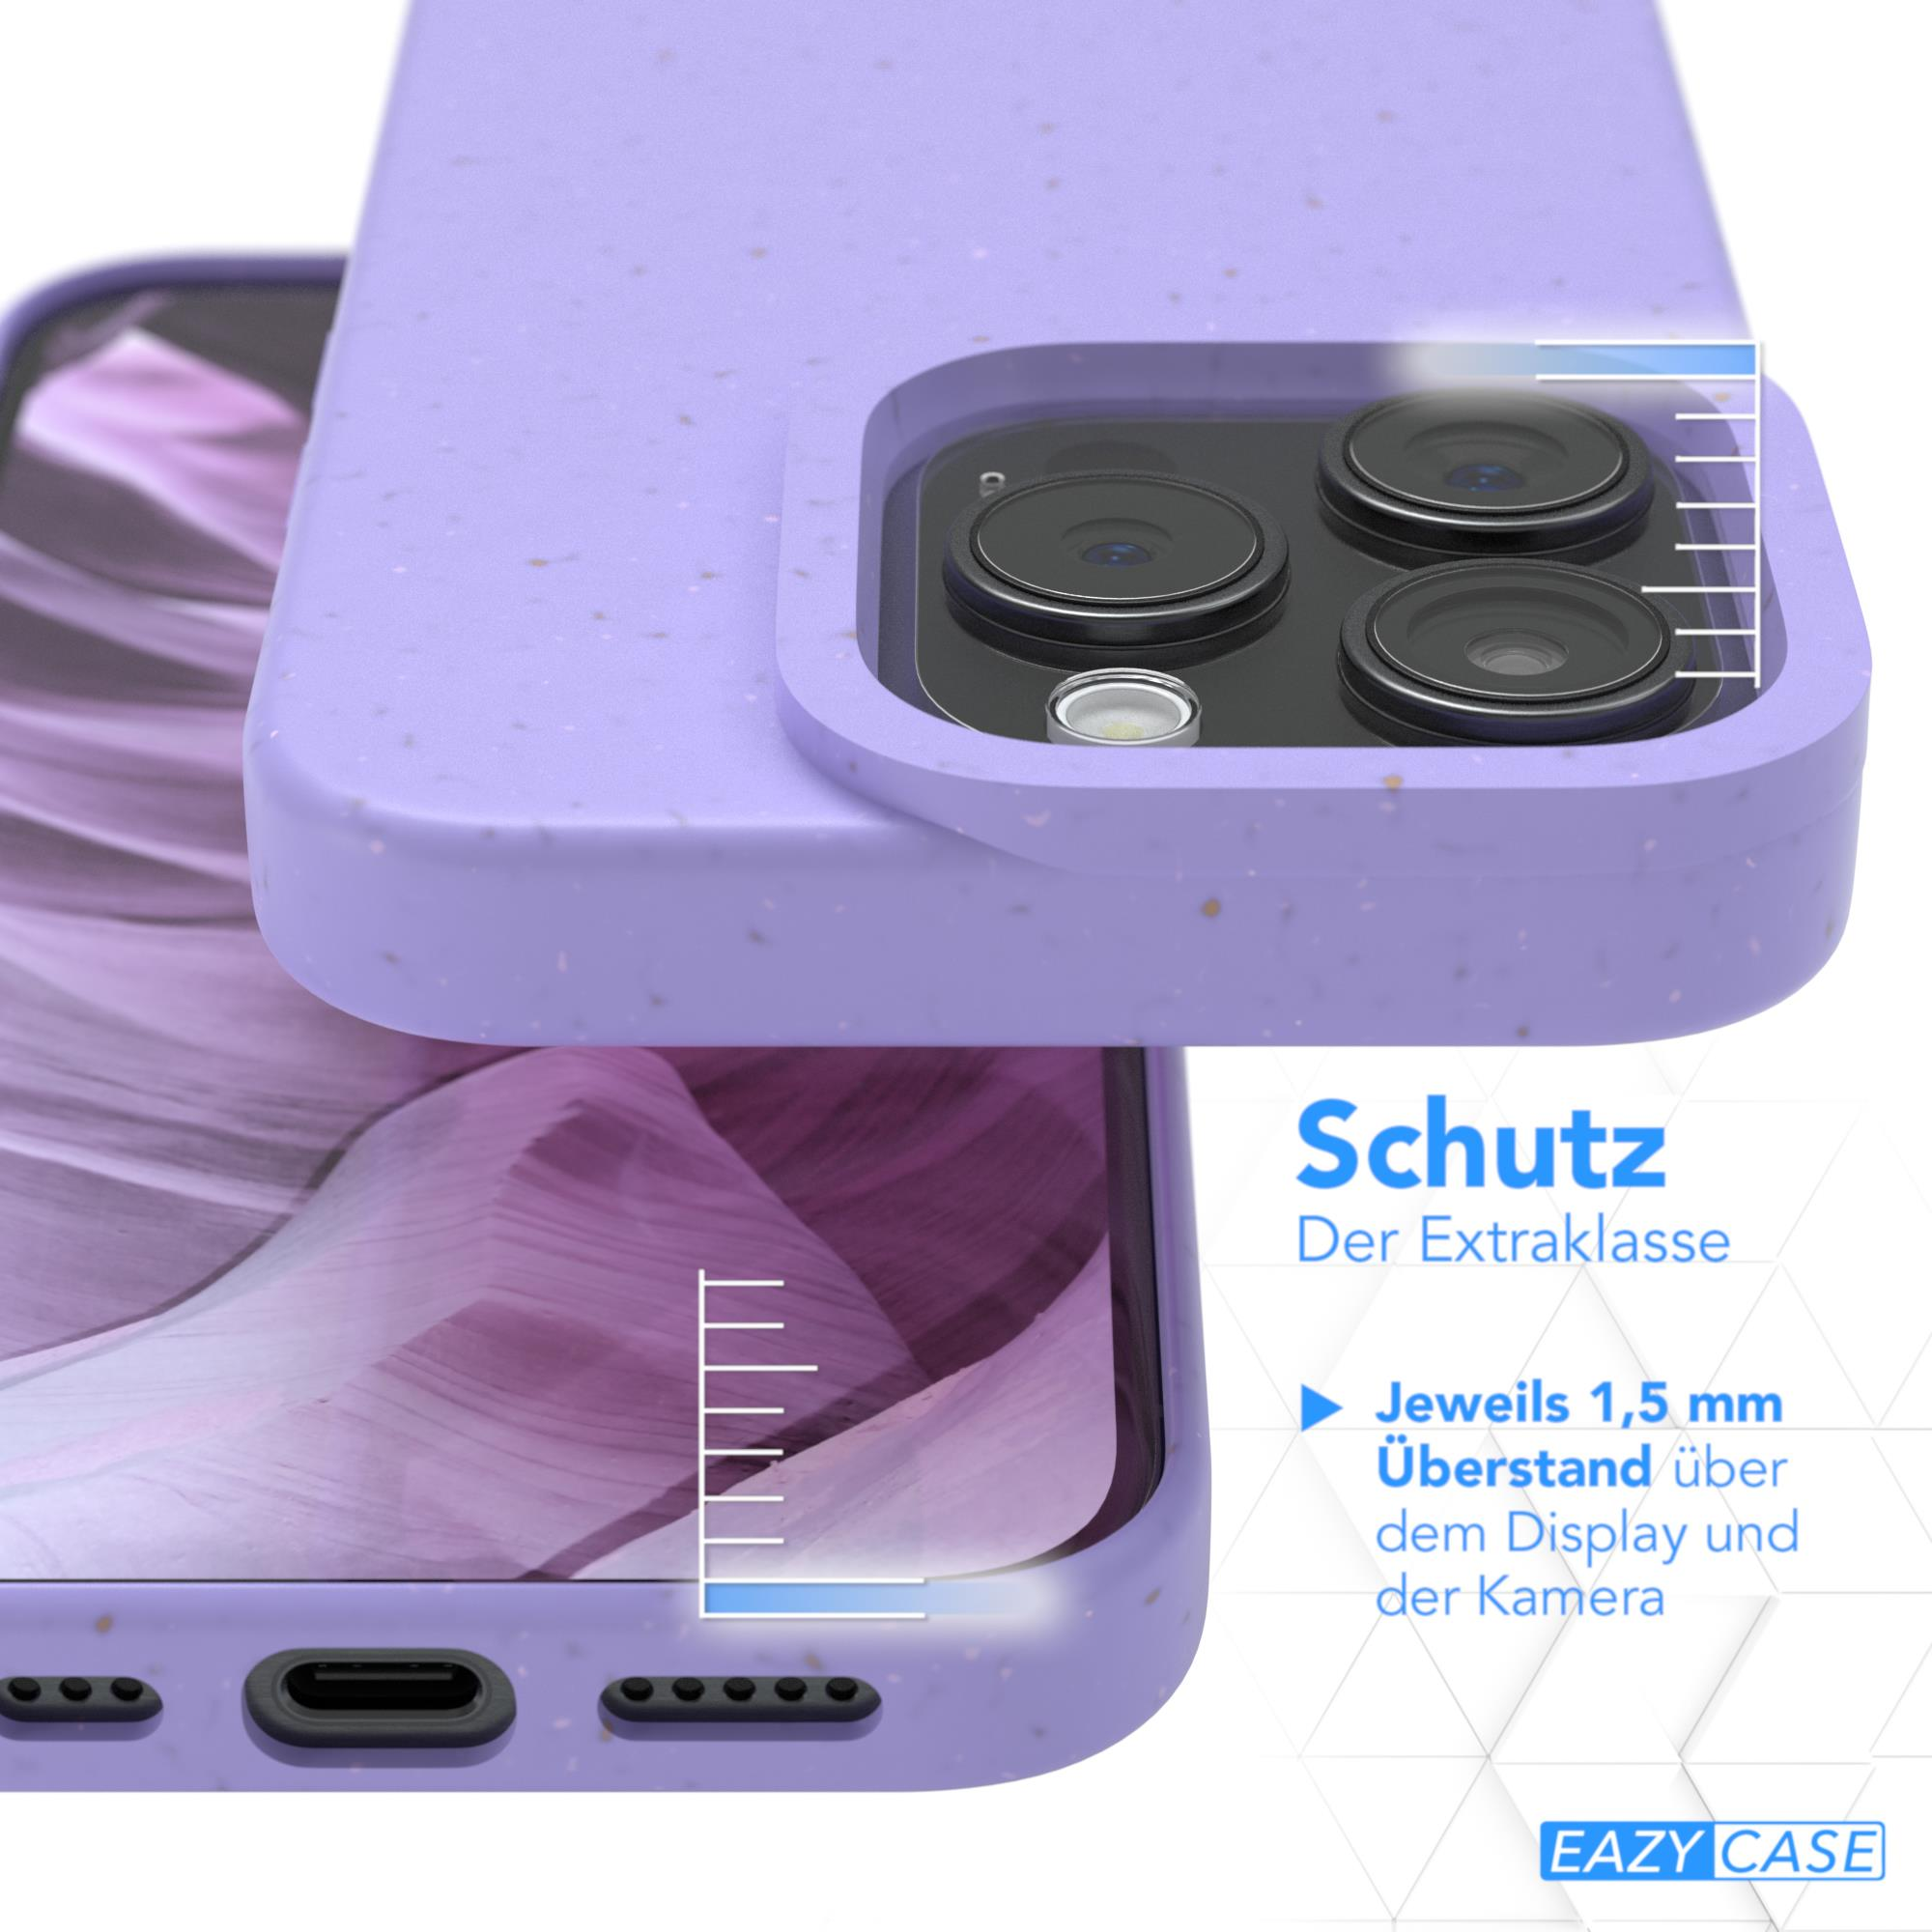 Bumper, Lila CASE / iPhone Pro, Violett 15 Apple, Biocase, EAZY